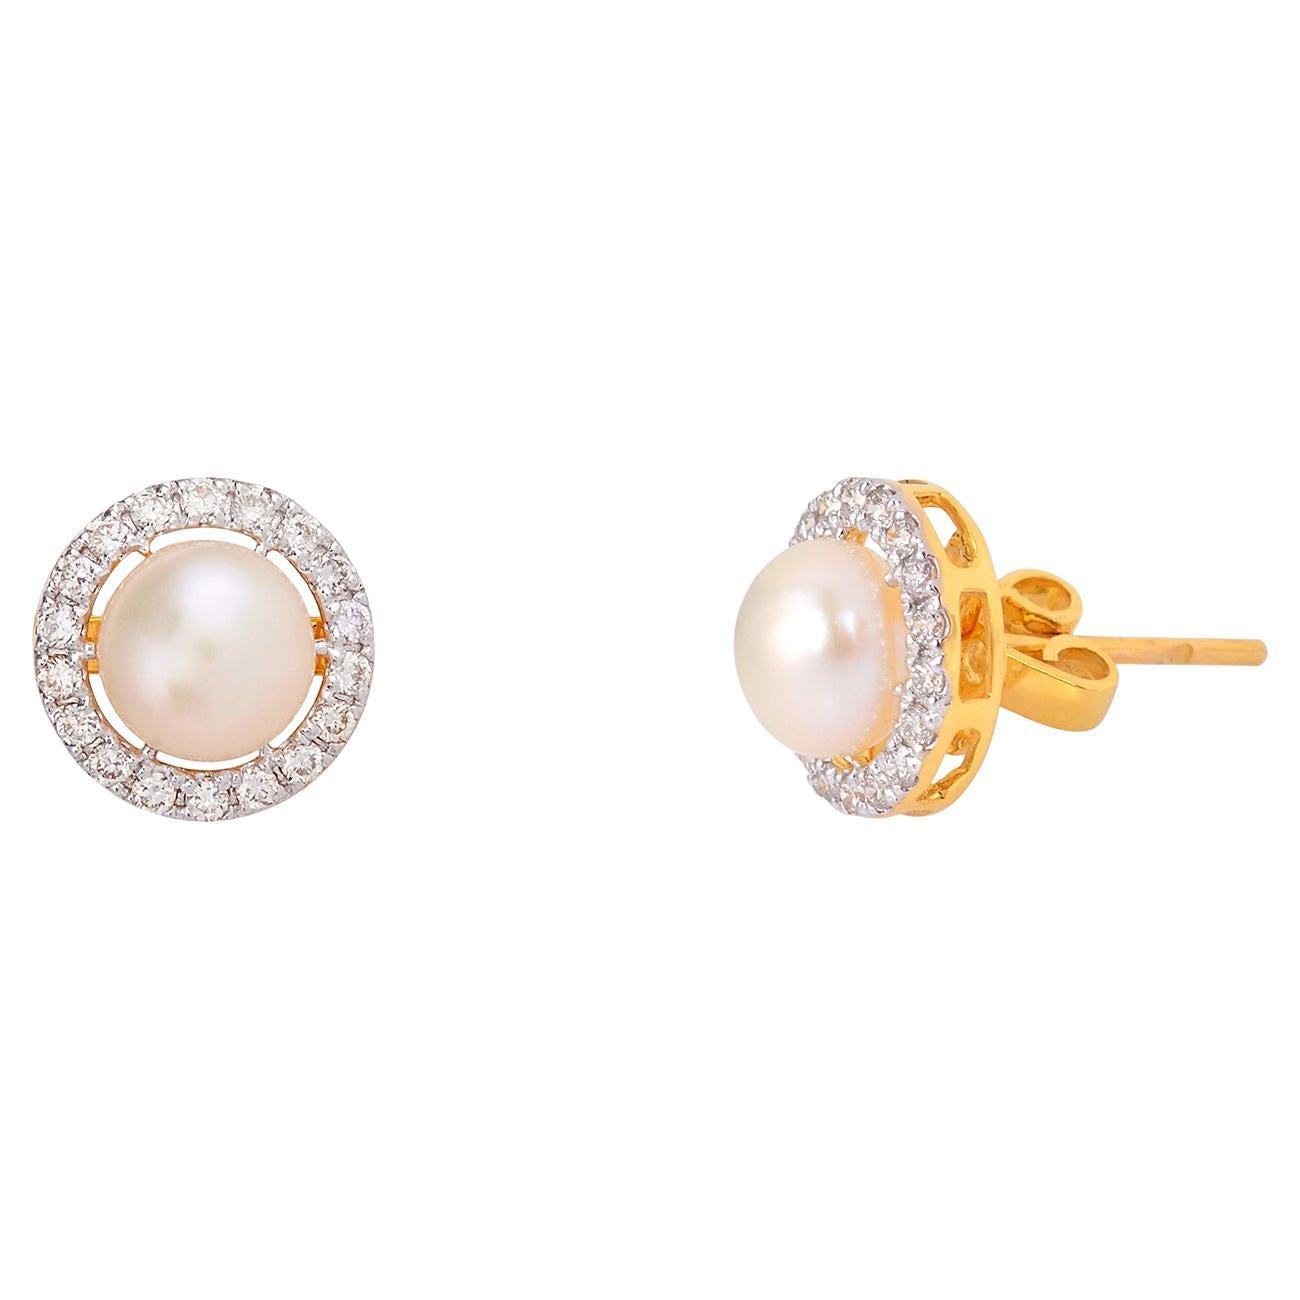 Pearl Stud Earrings with Diamond in 14k Gold